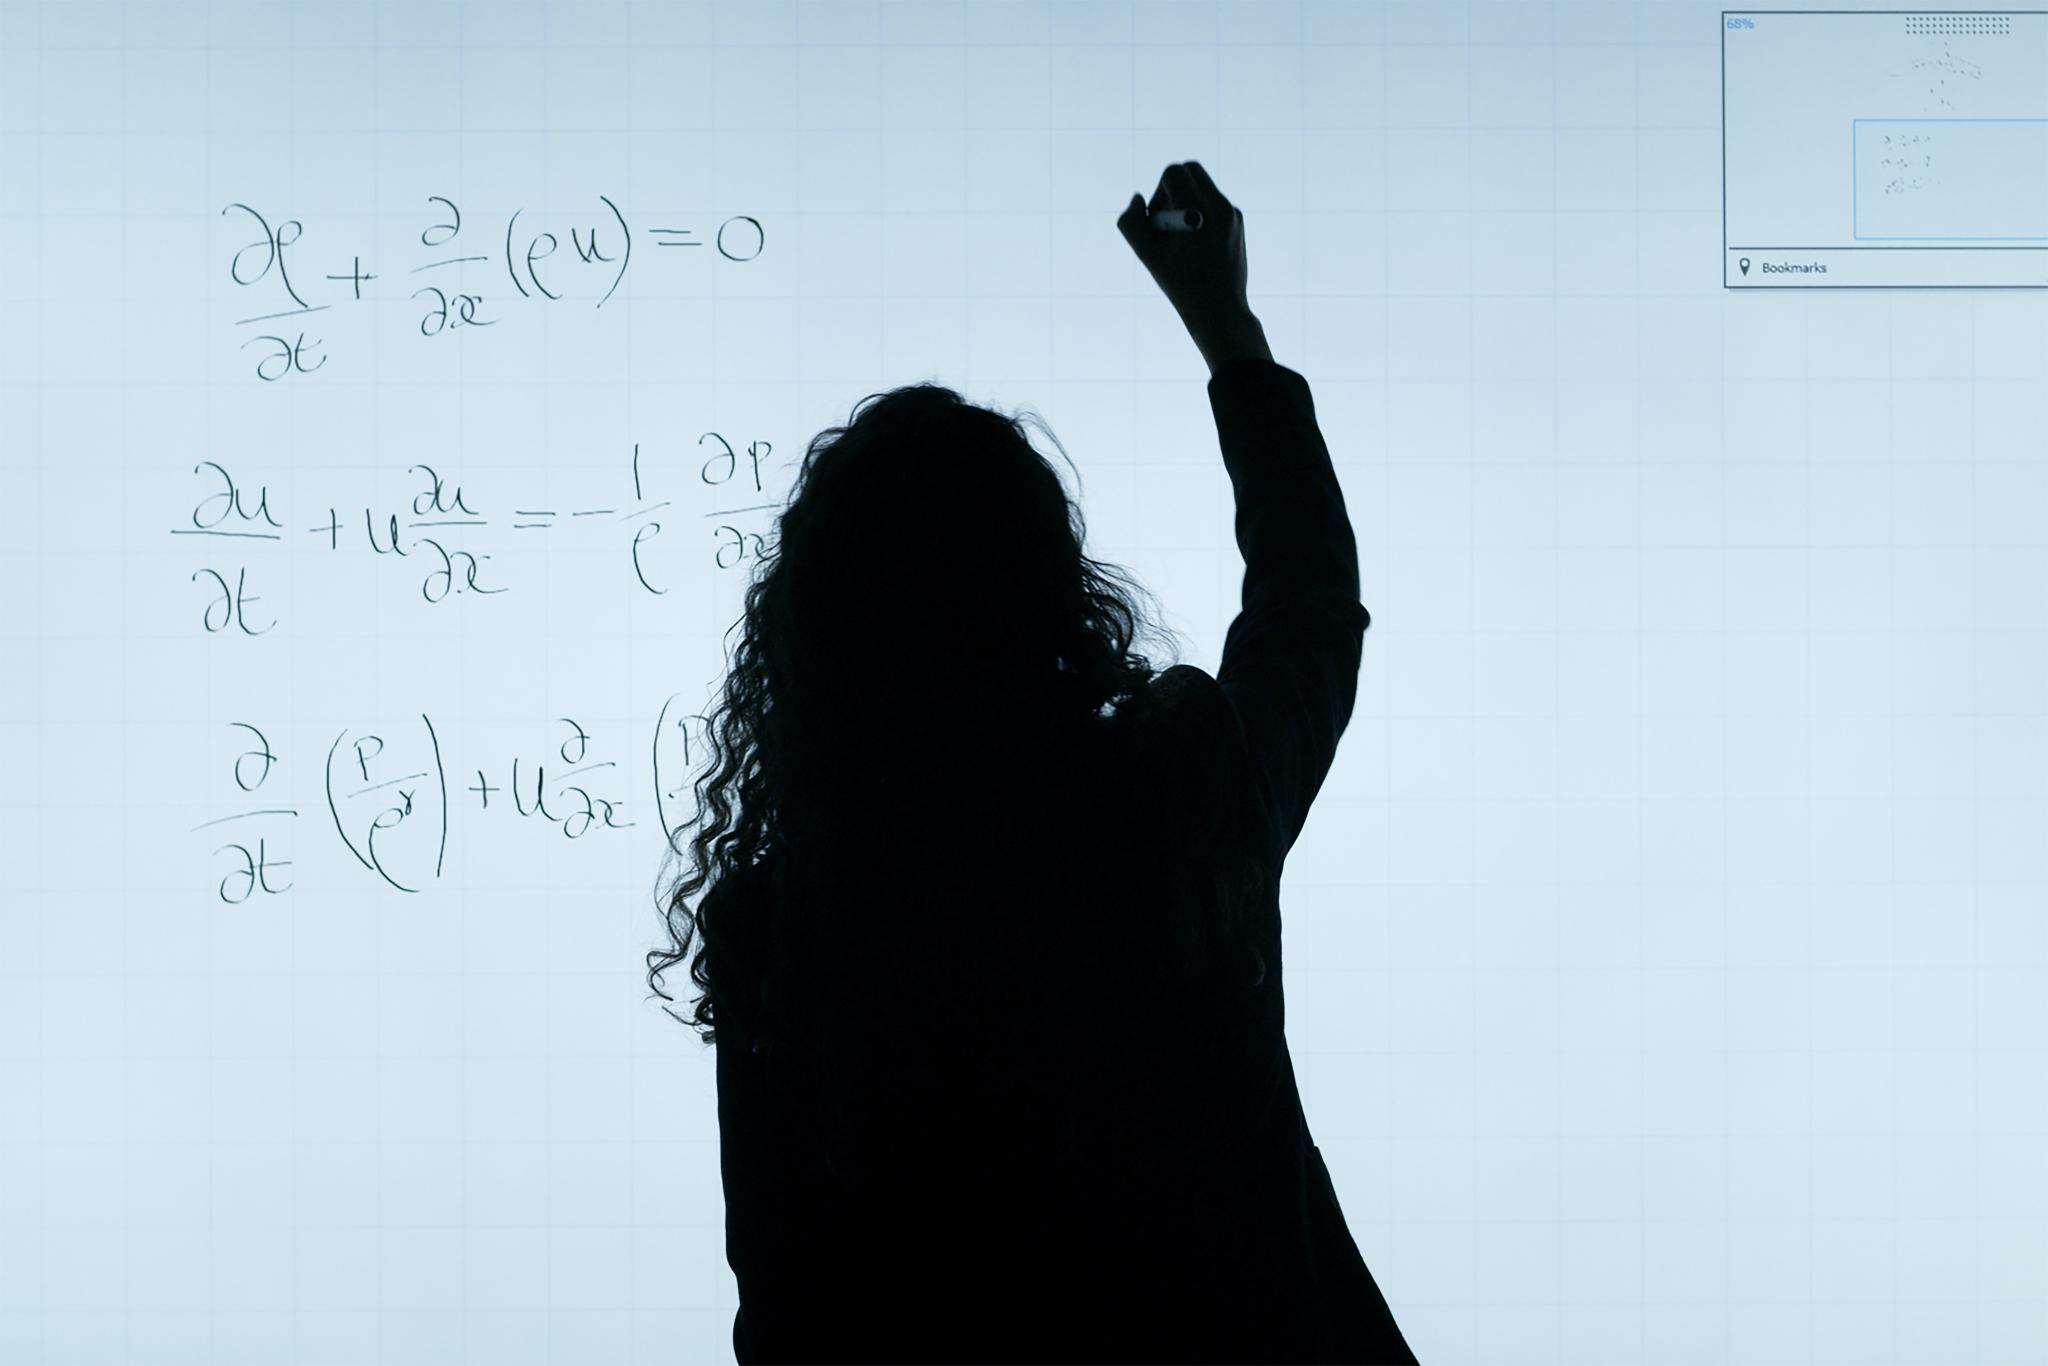 decorative - writing out a math problem on a smartboard